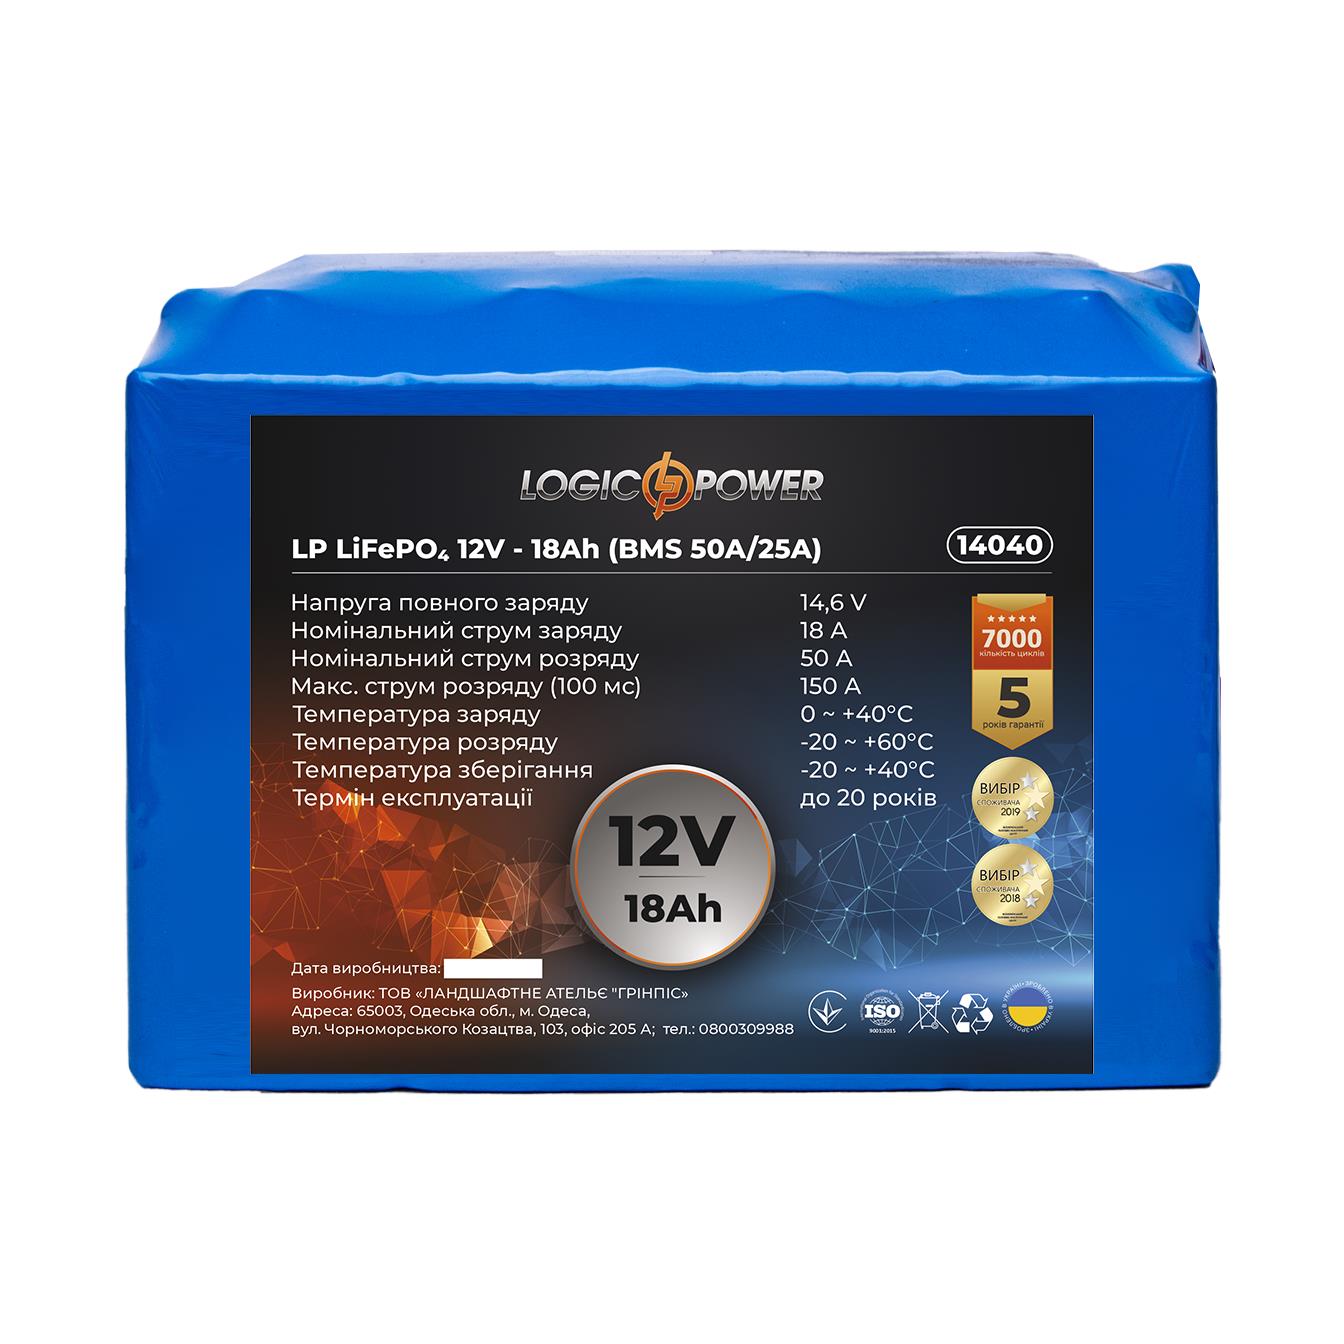 LogicPower LP LiFePO4 12V - 18 Ah (BMS 50A/25A) (14040)